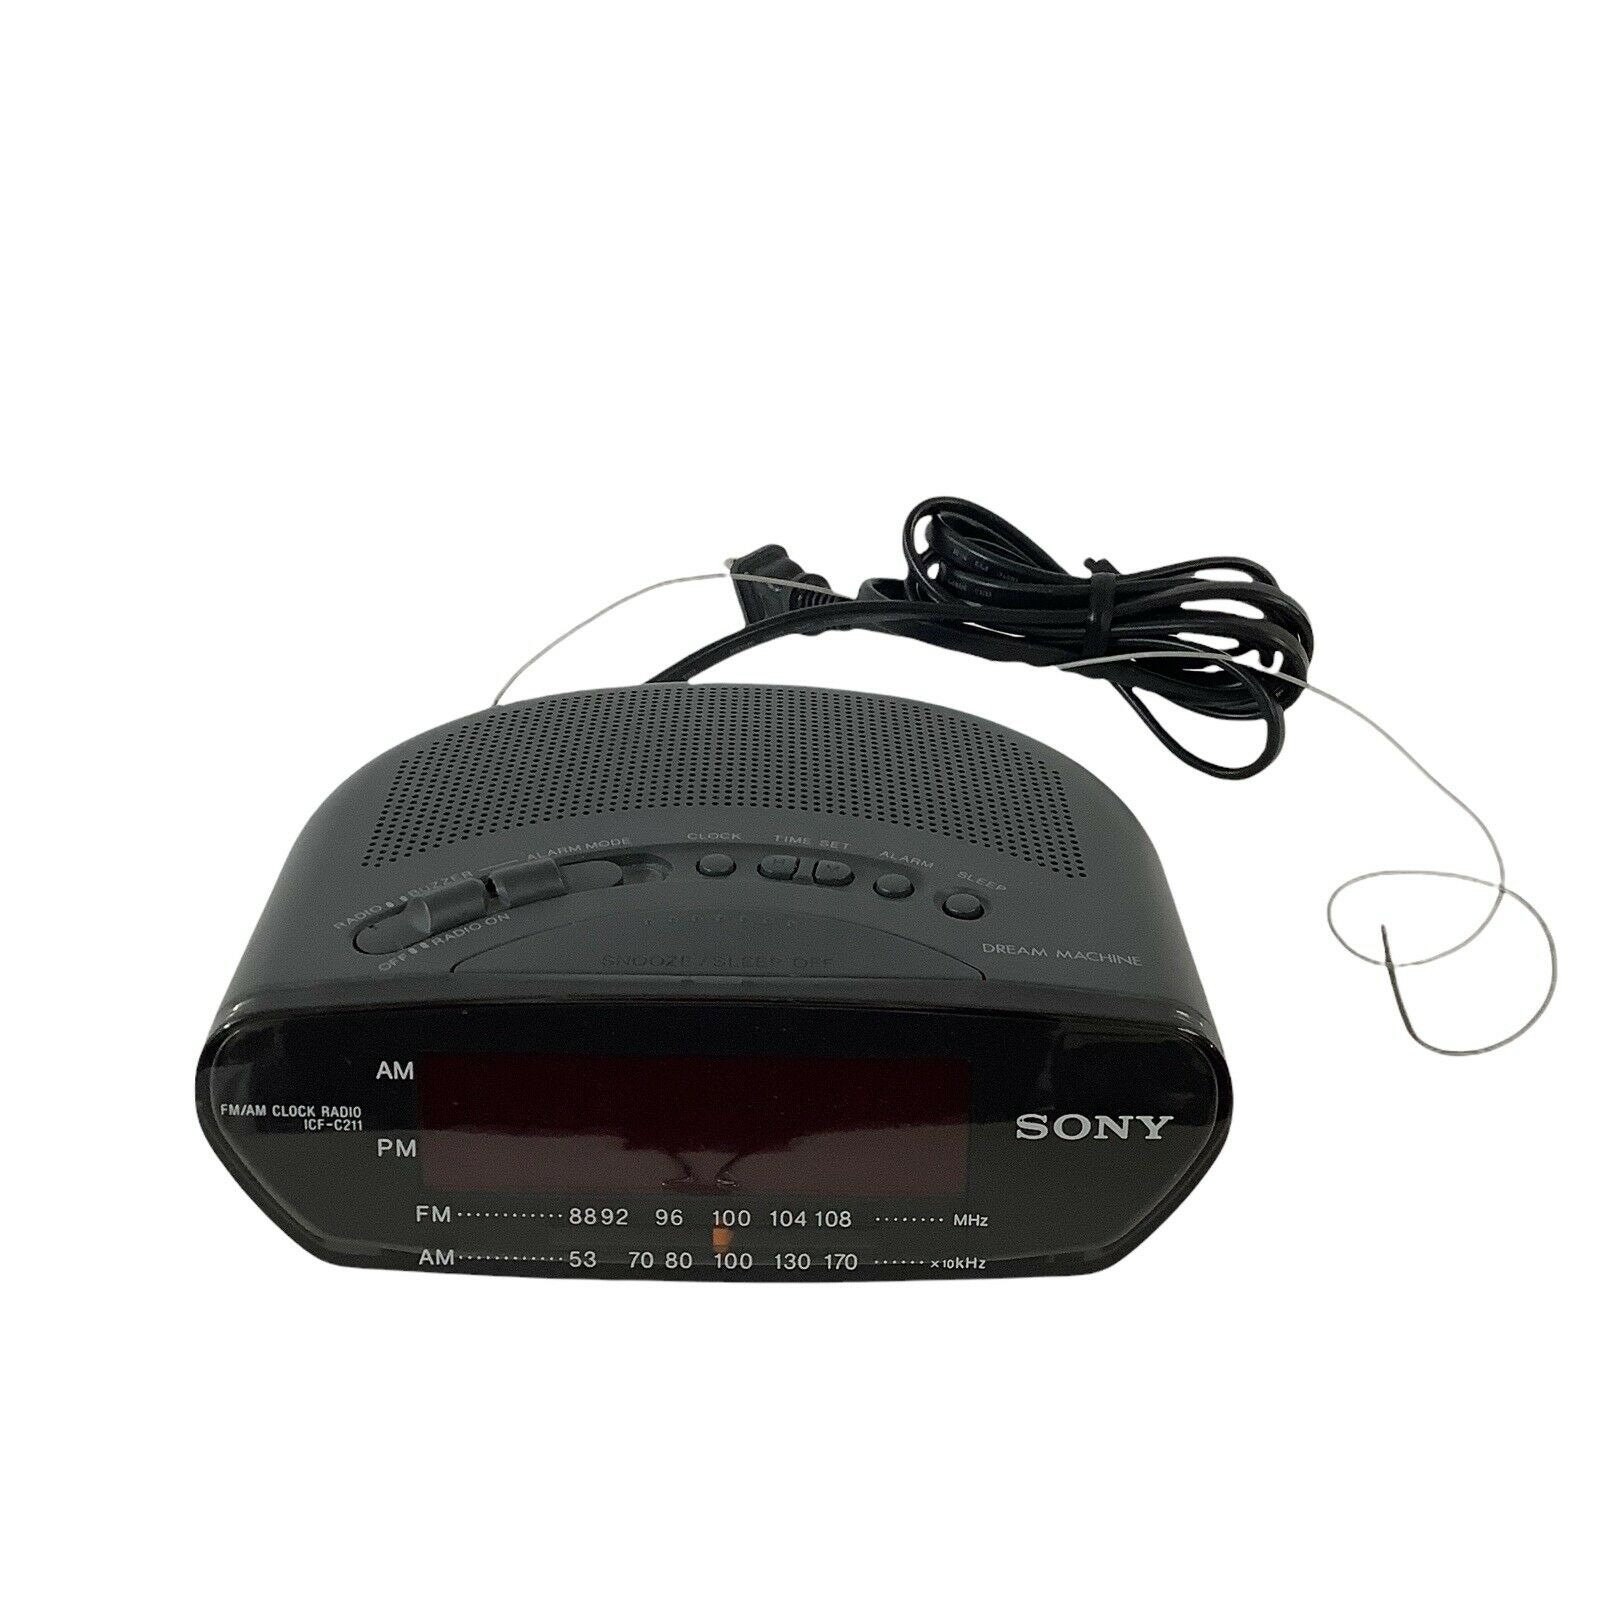 Sony Dream Machine Black ICF-C211 AM/FM Clock Radio Large Red LED Time